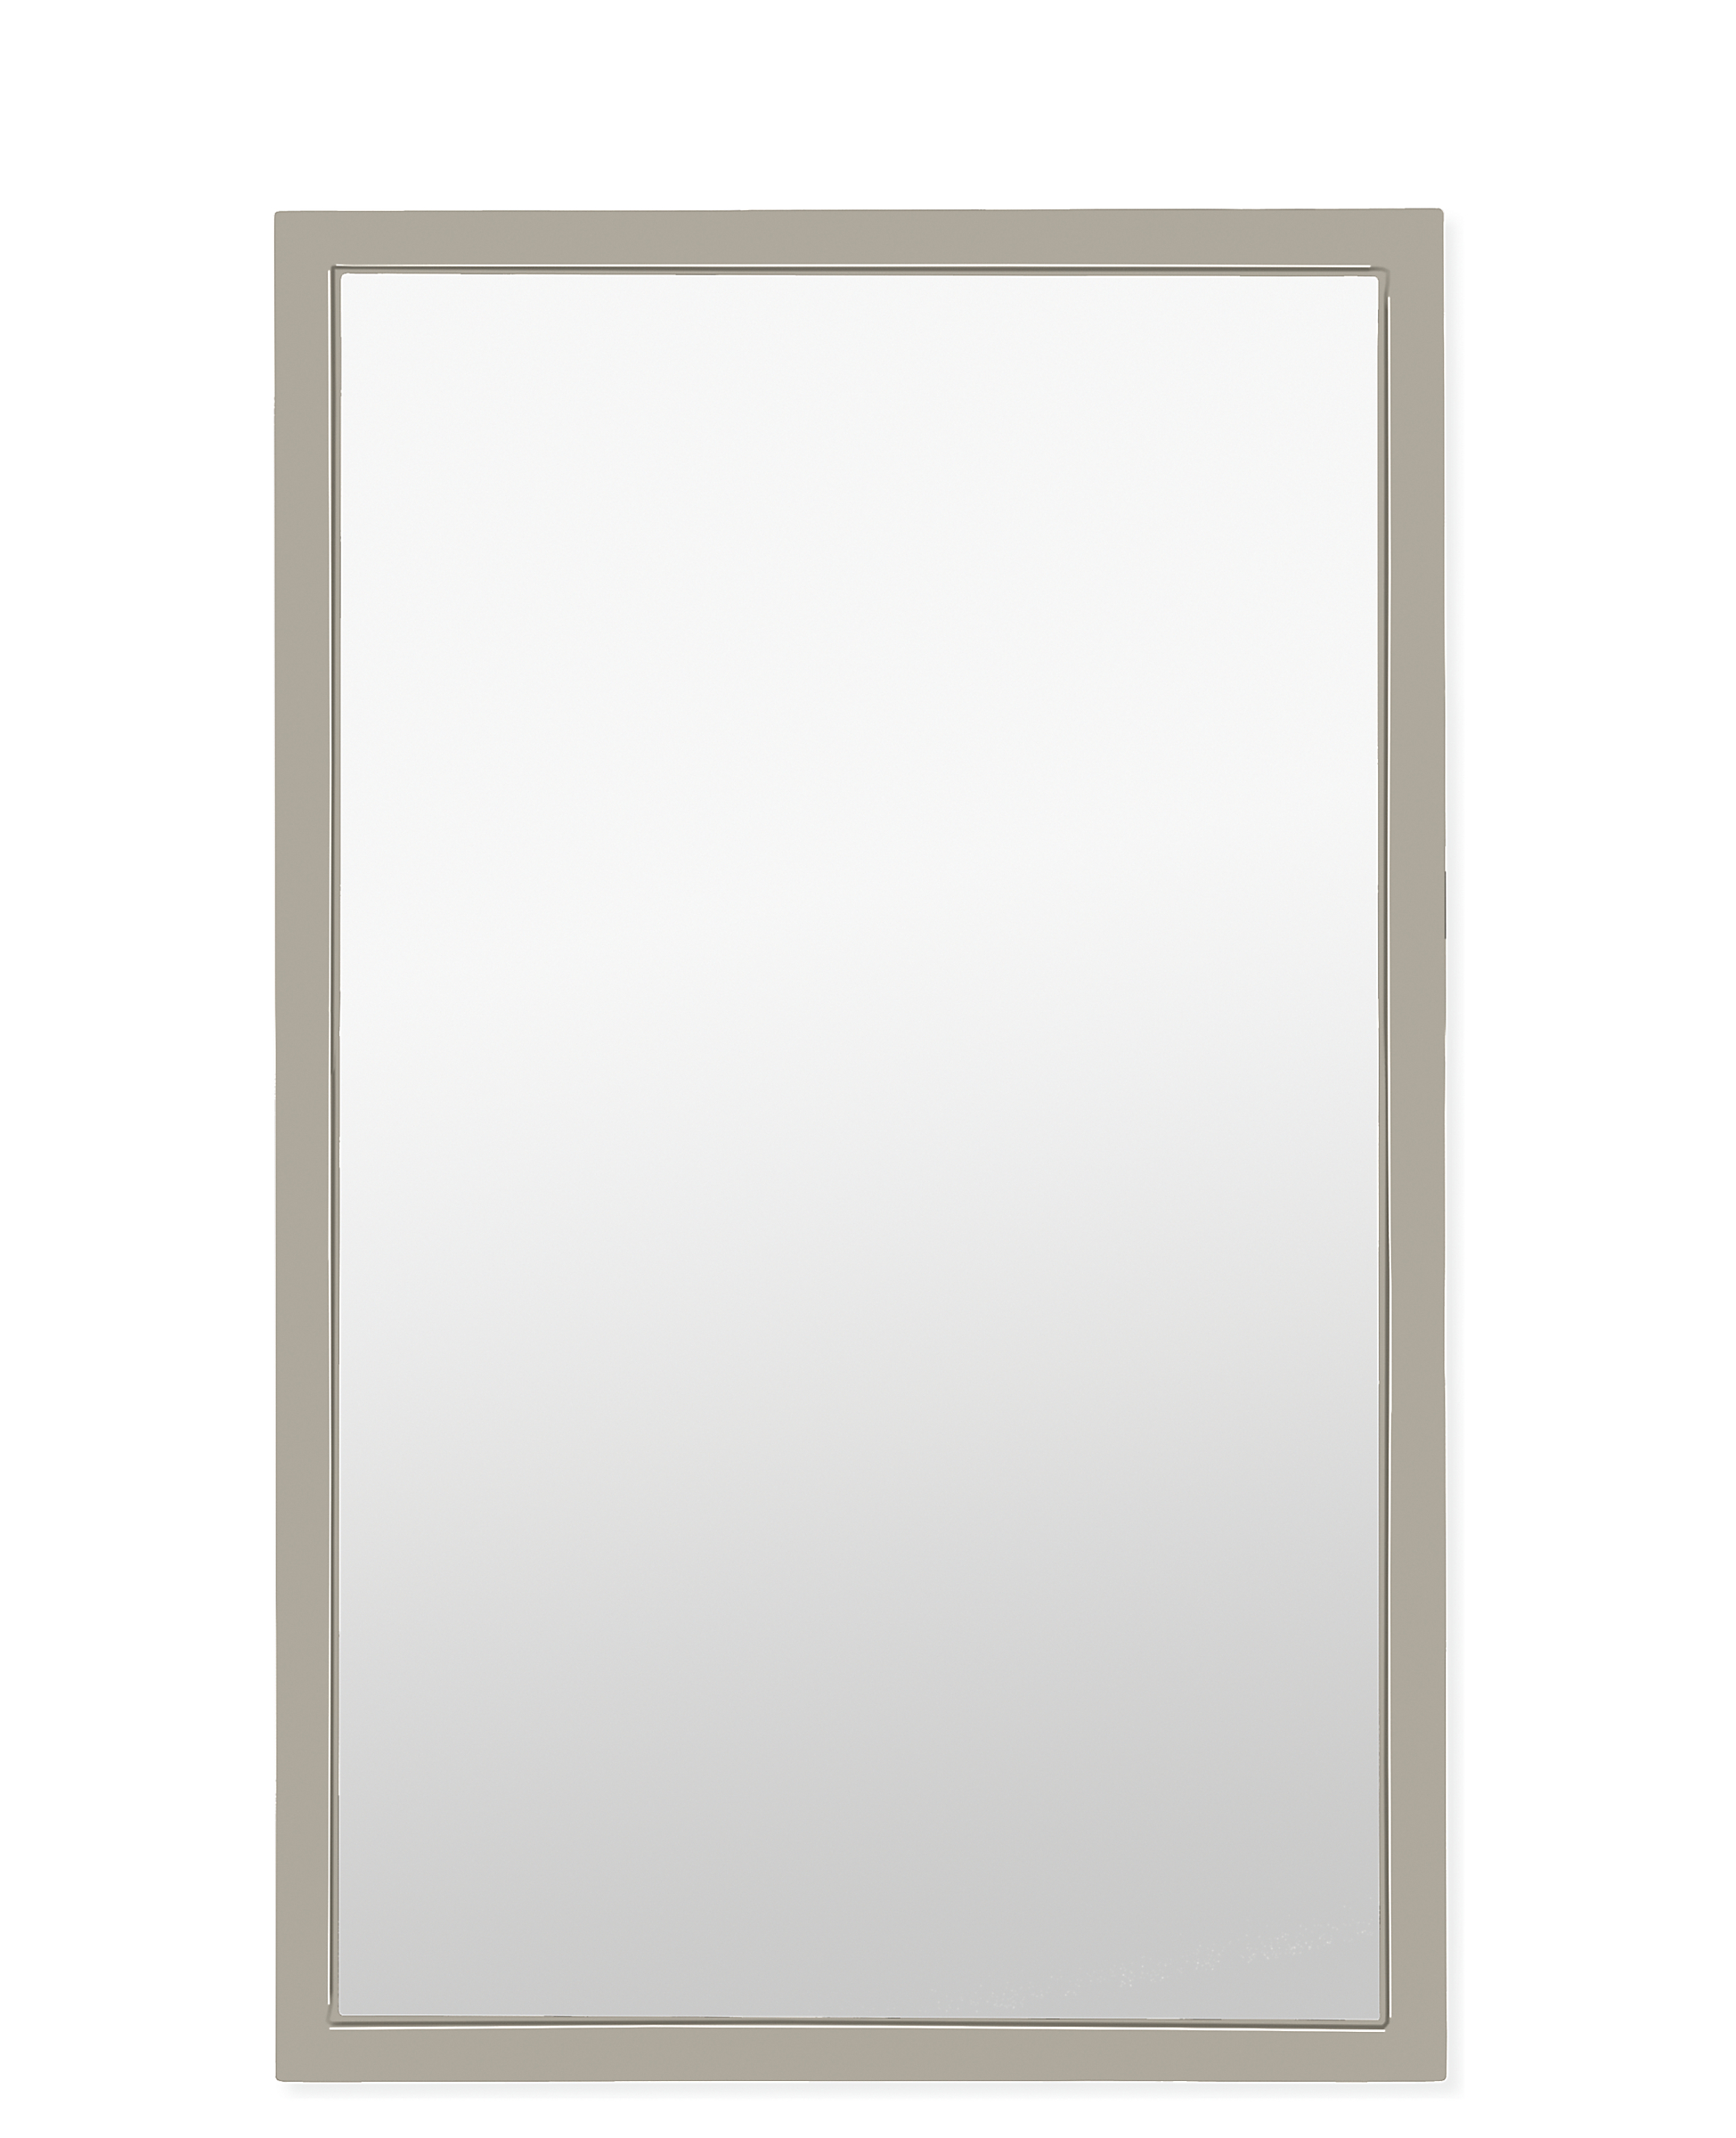 Soho 20w 1.5d 32h Wall Mirror for Bathroom